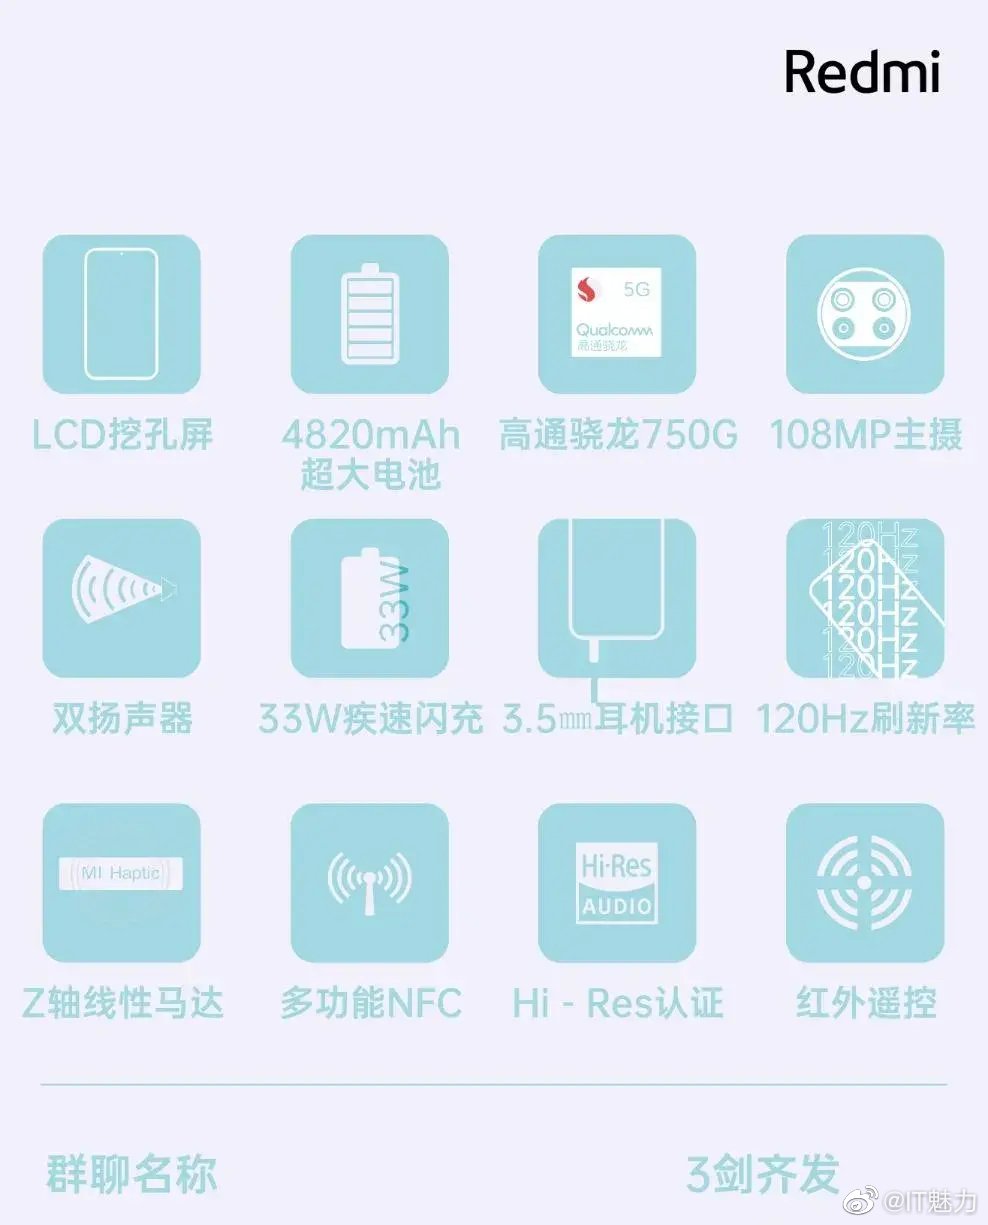 Redmi Note 9 Pro 5G key specs